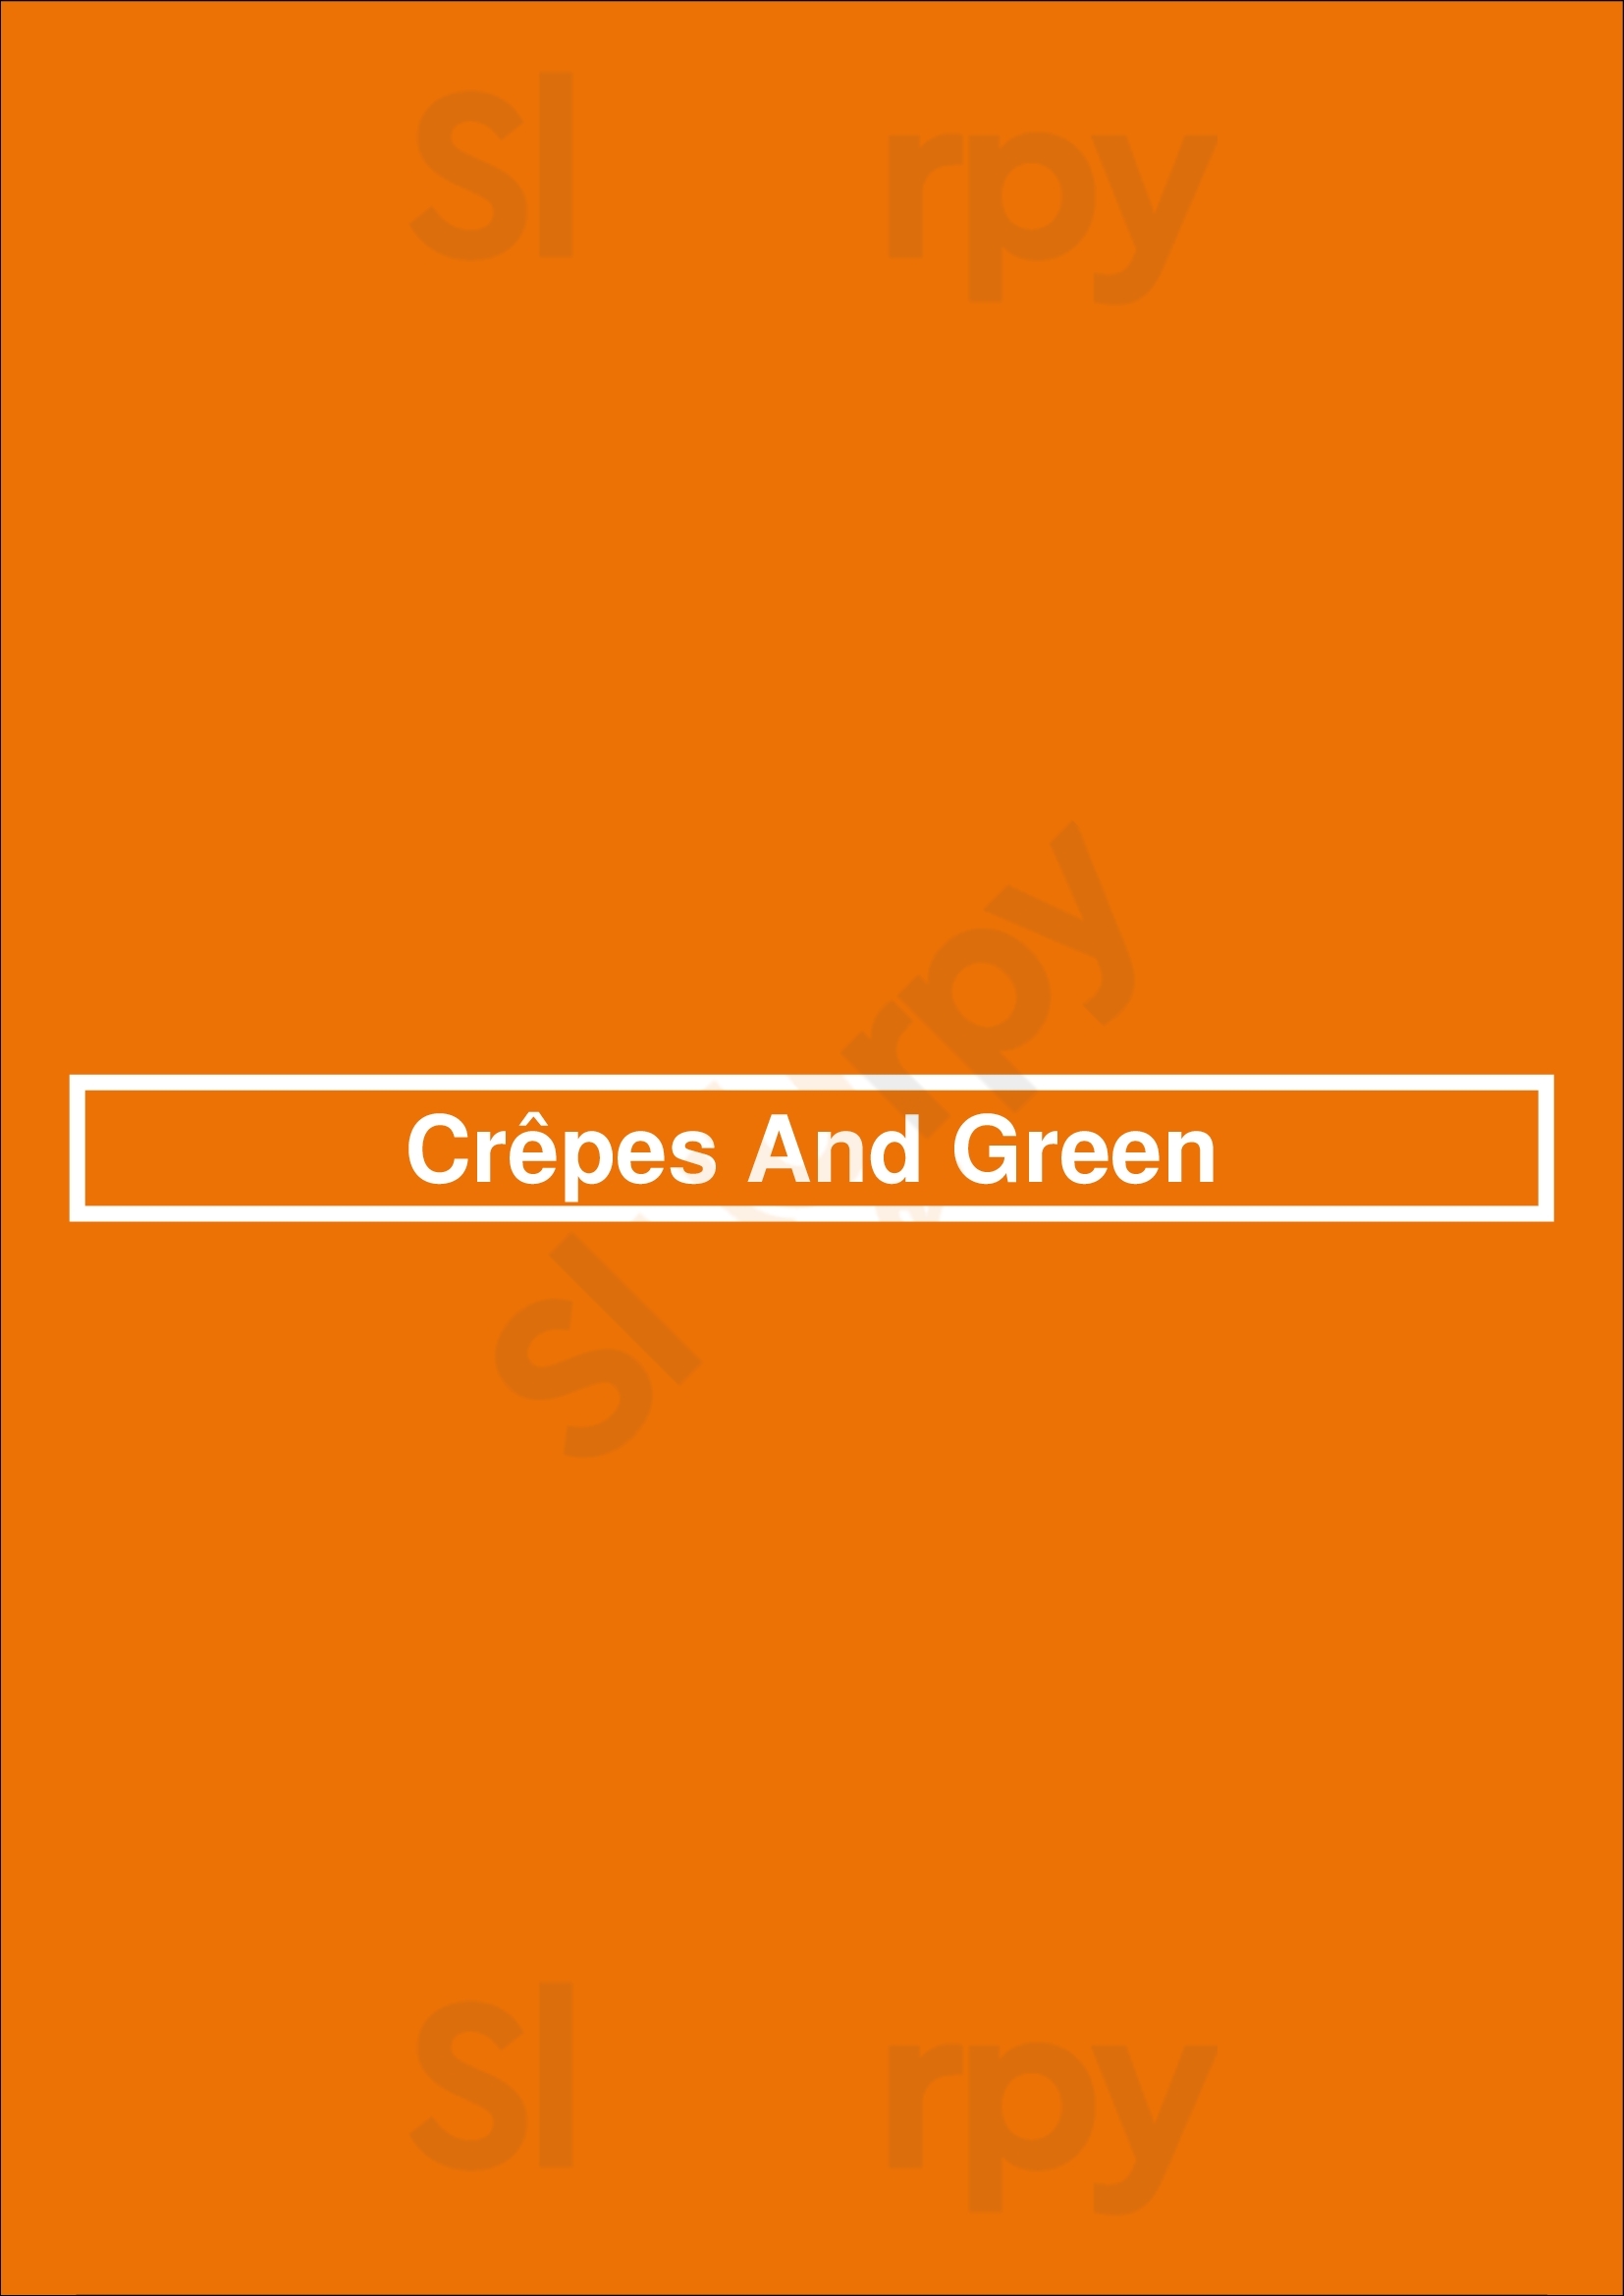 Crêpes And Green Paris Menu - 1